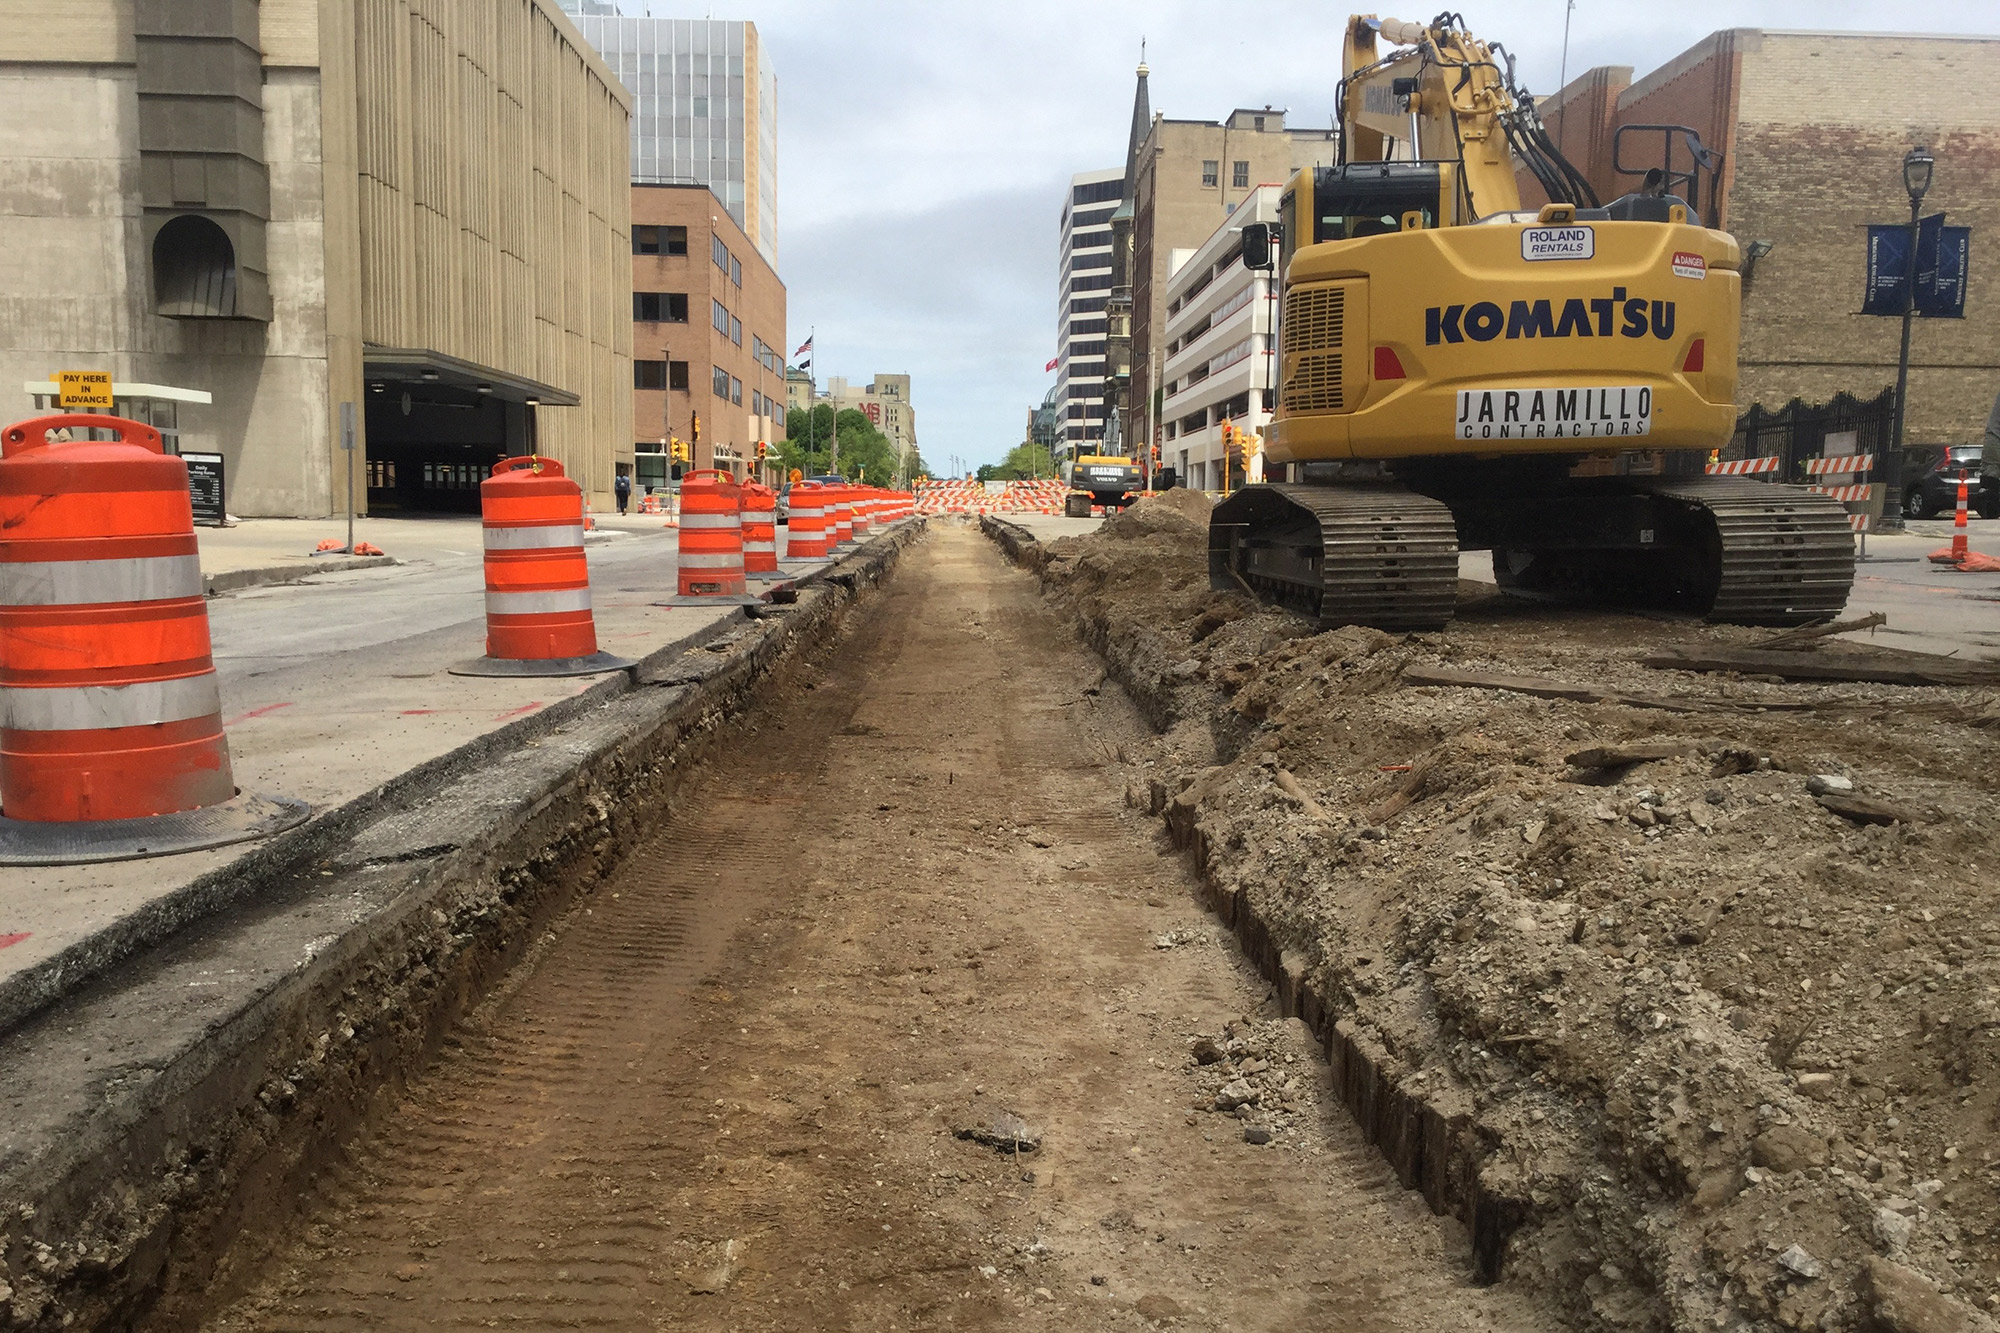 Large Komatsu excavator near downtown Milwaukee